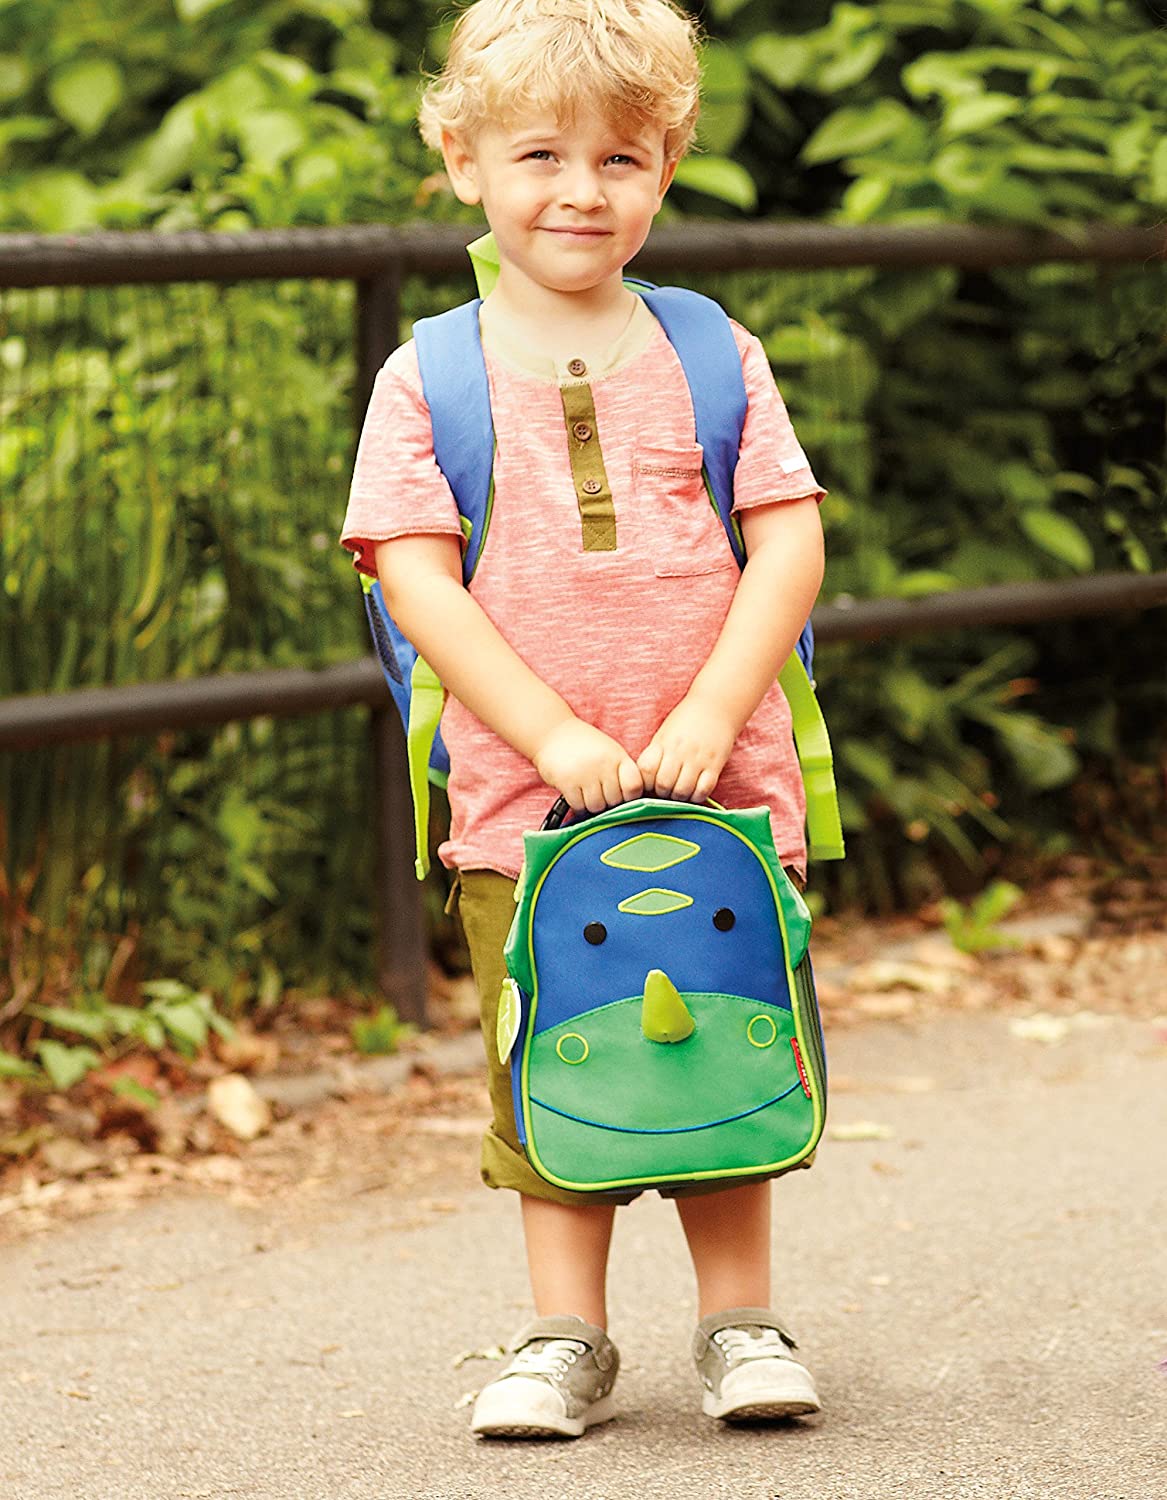 Zoo Big Kid Backpack - Dino